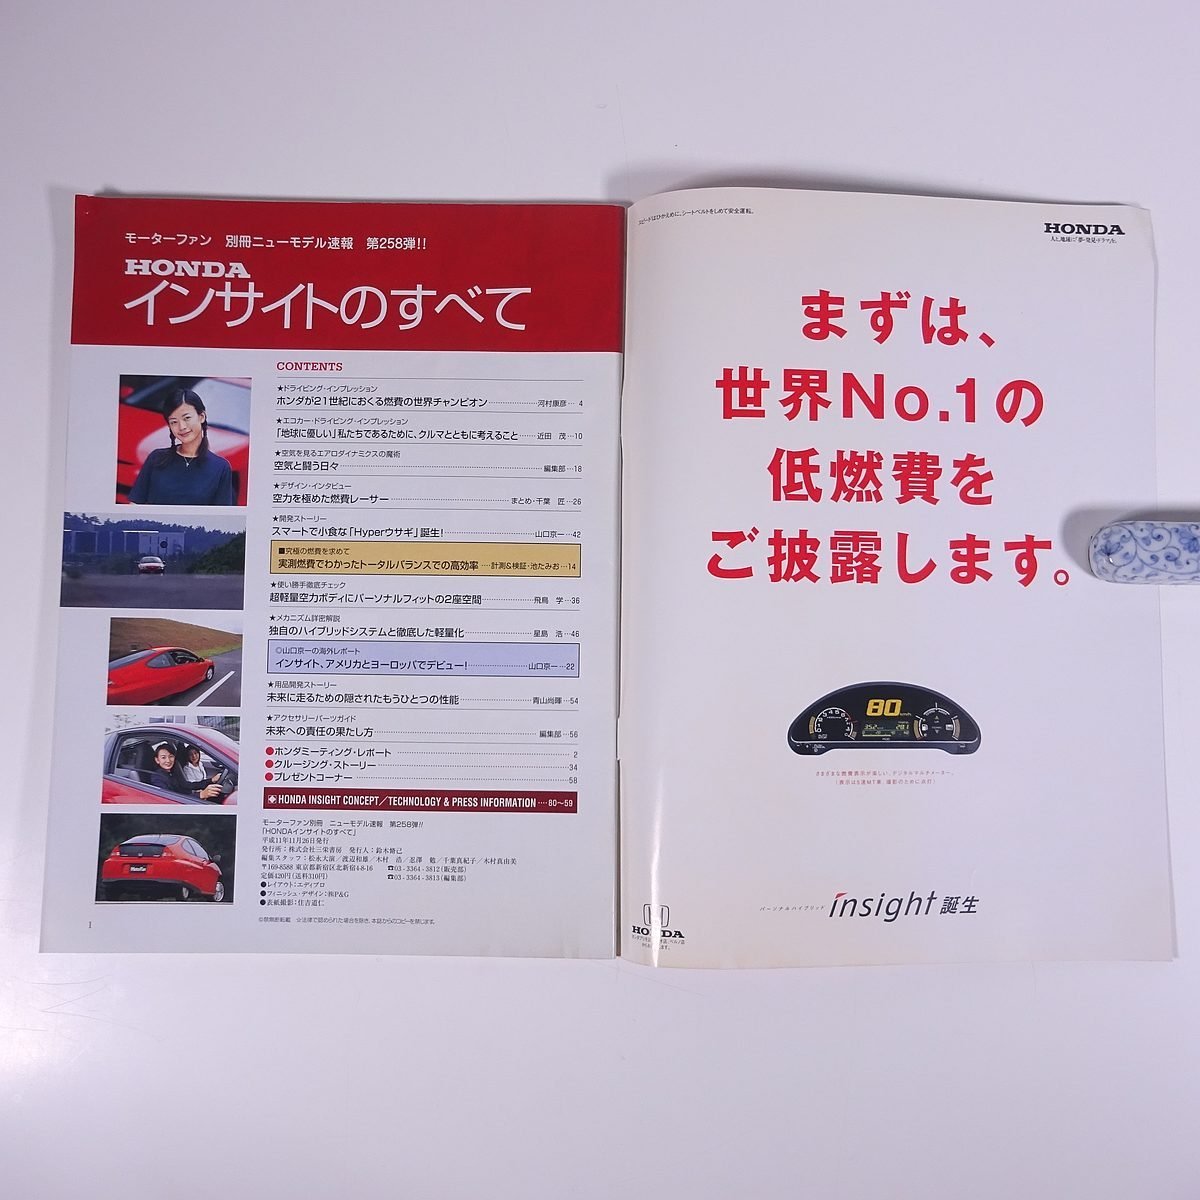 HONDA Honda Insight. all Motor Fan separate volume new model news flash no. 258. three . bookstore 1999 large book@ automobile car 